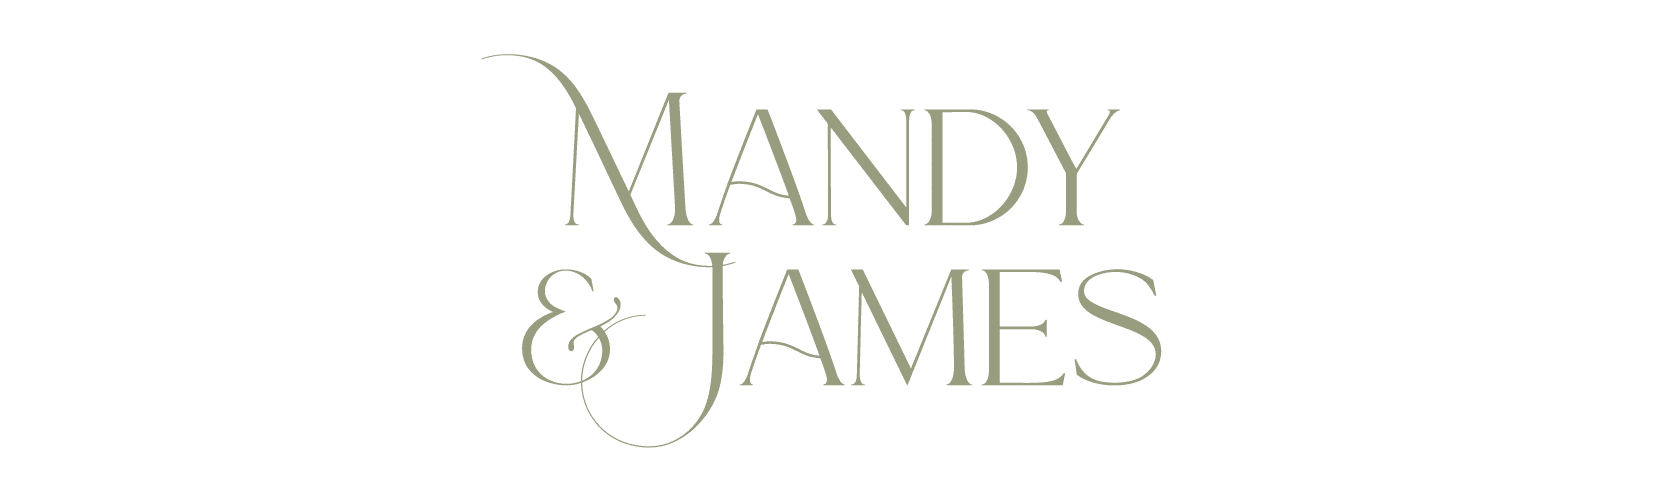 Mandy & James